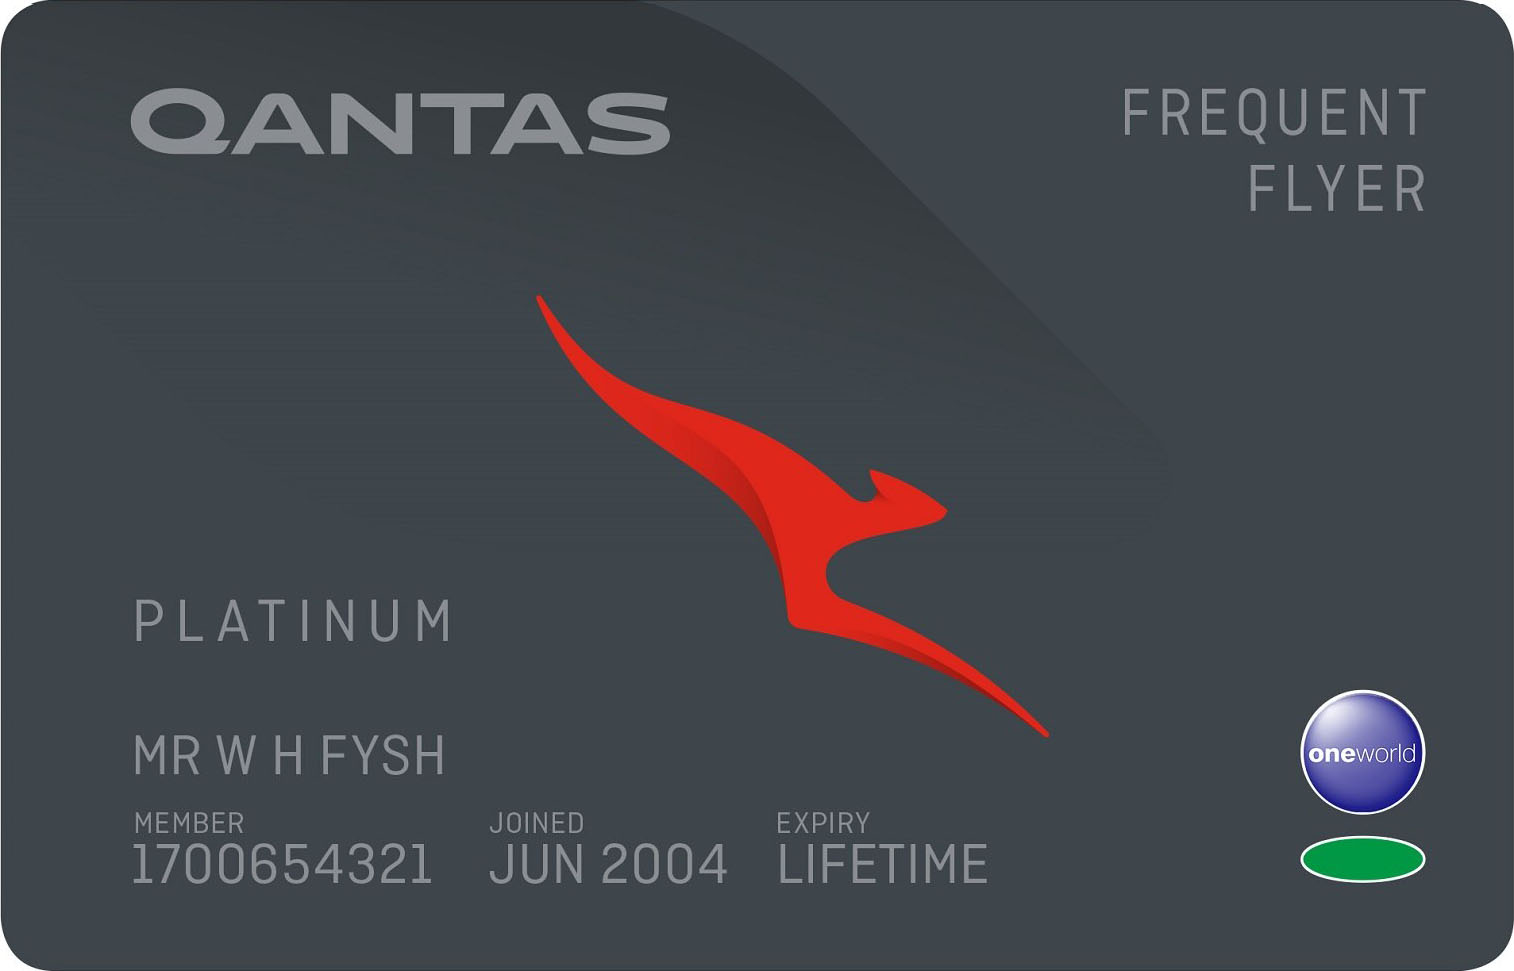 Qantas Lifetime Platinum frequent flyer membership card